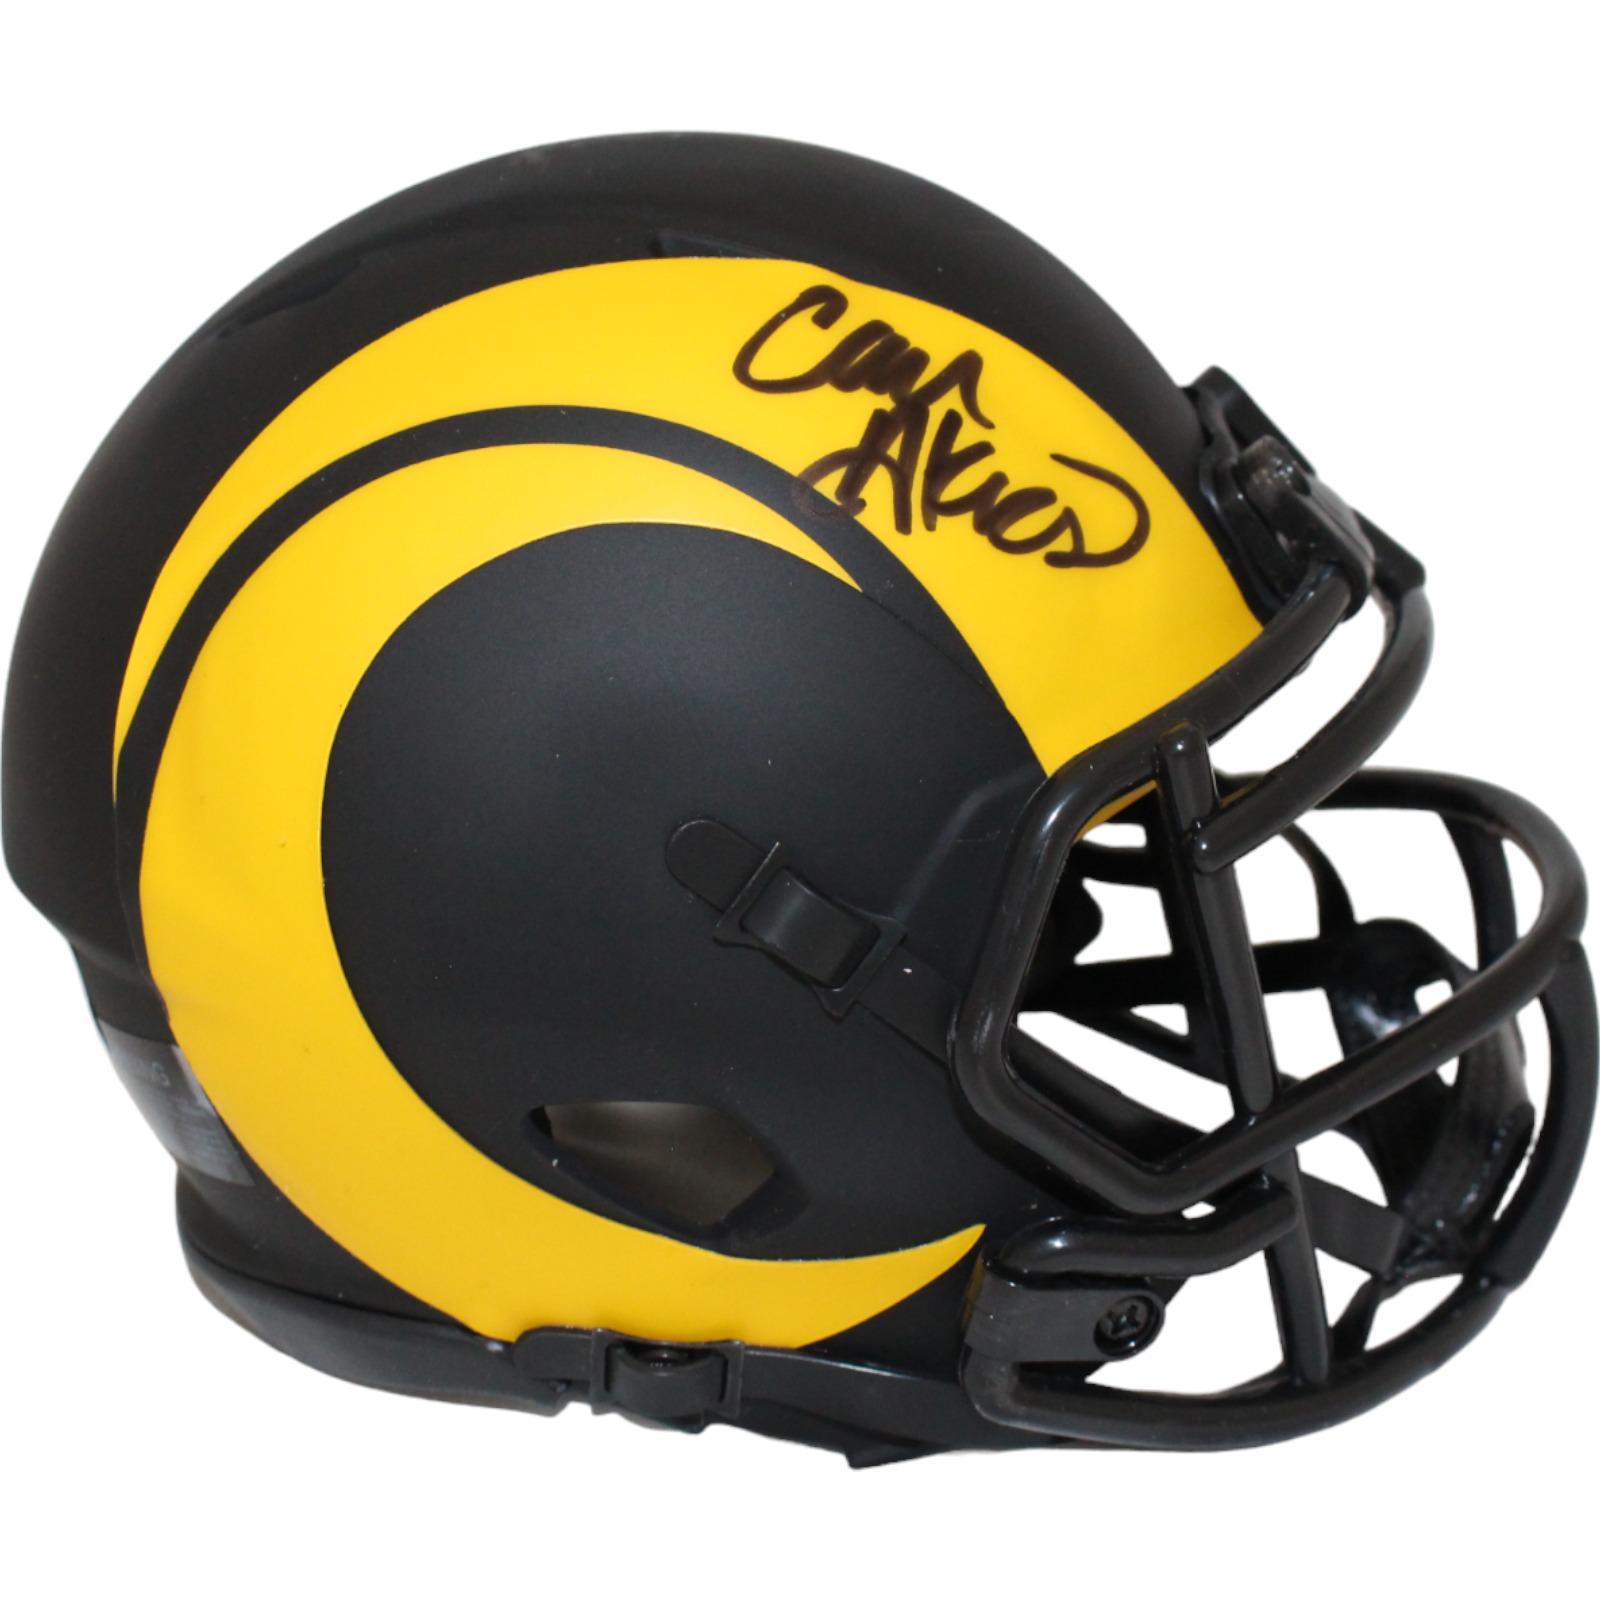 Cam Akers Signed Los Angeles Rams Eclipse Mini Helmet Beckett